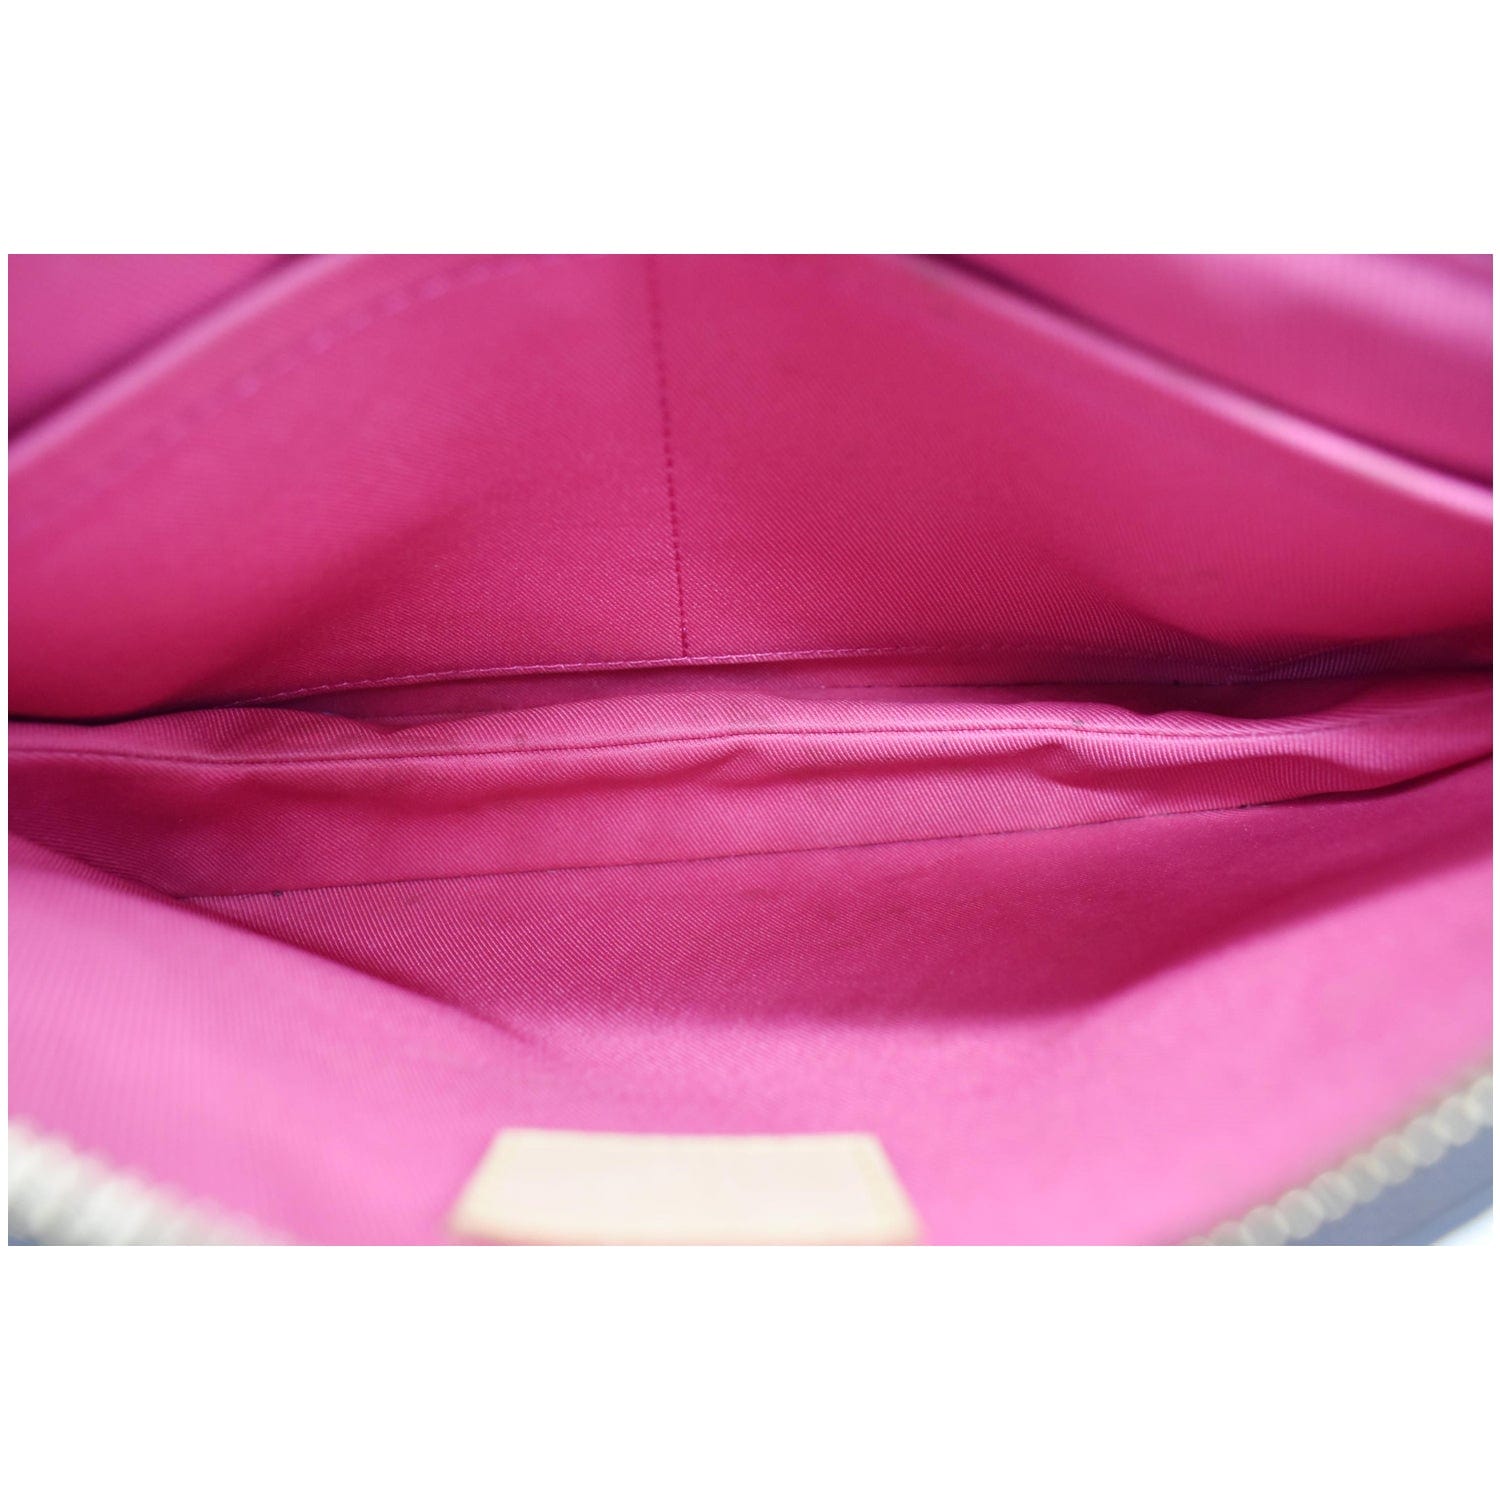 Louis Vuitton Lorette Monogram Bag US$ 971 Explore the full